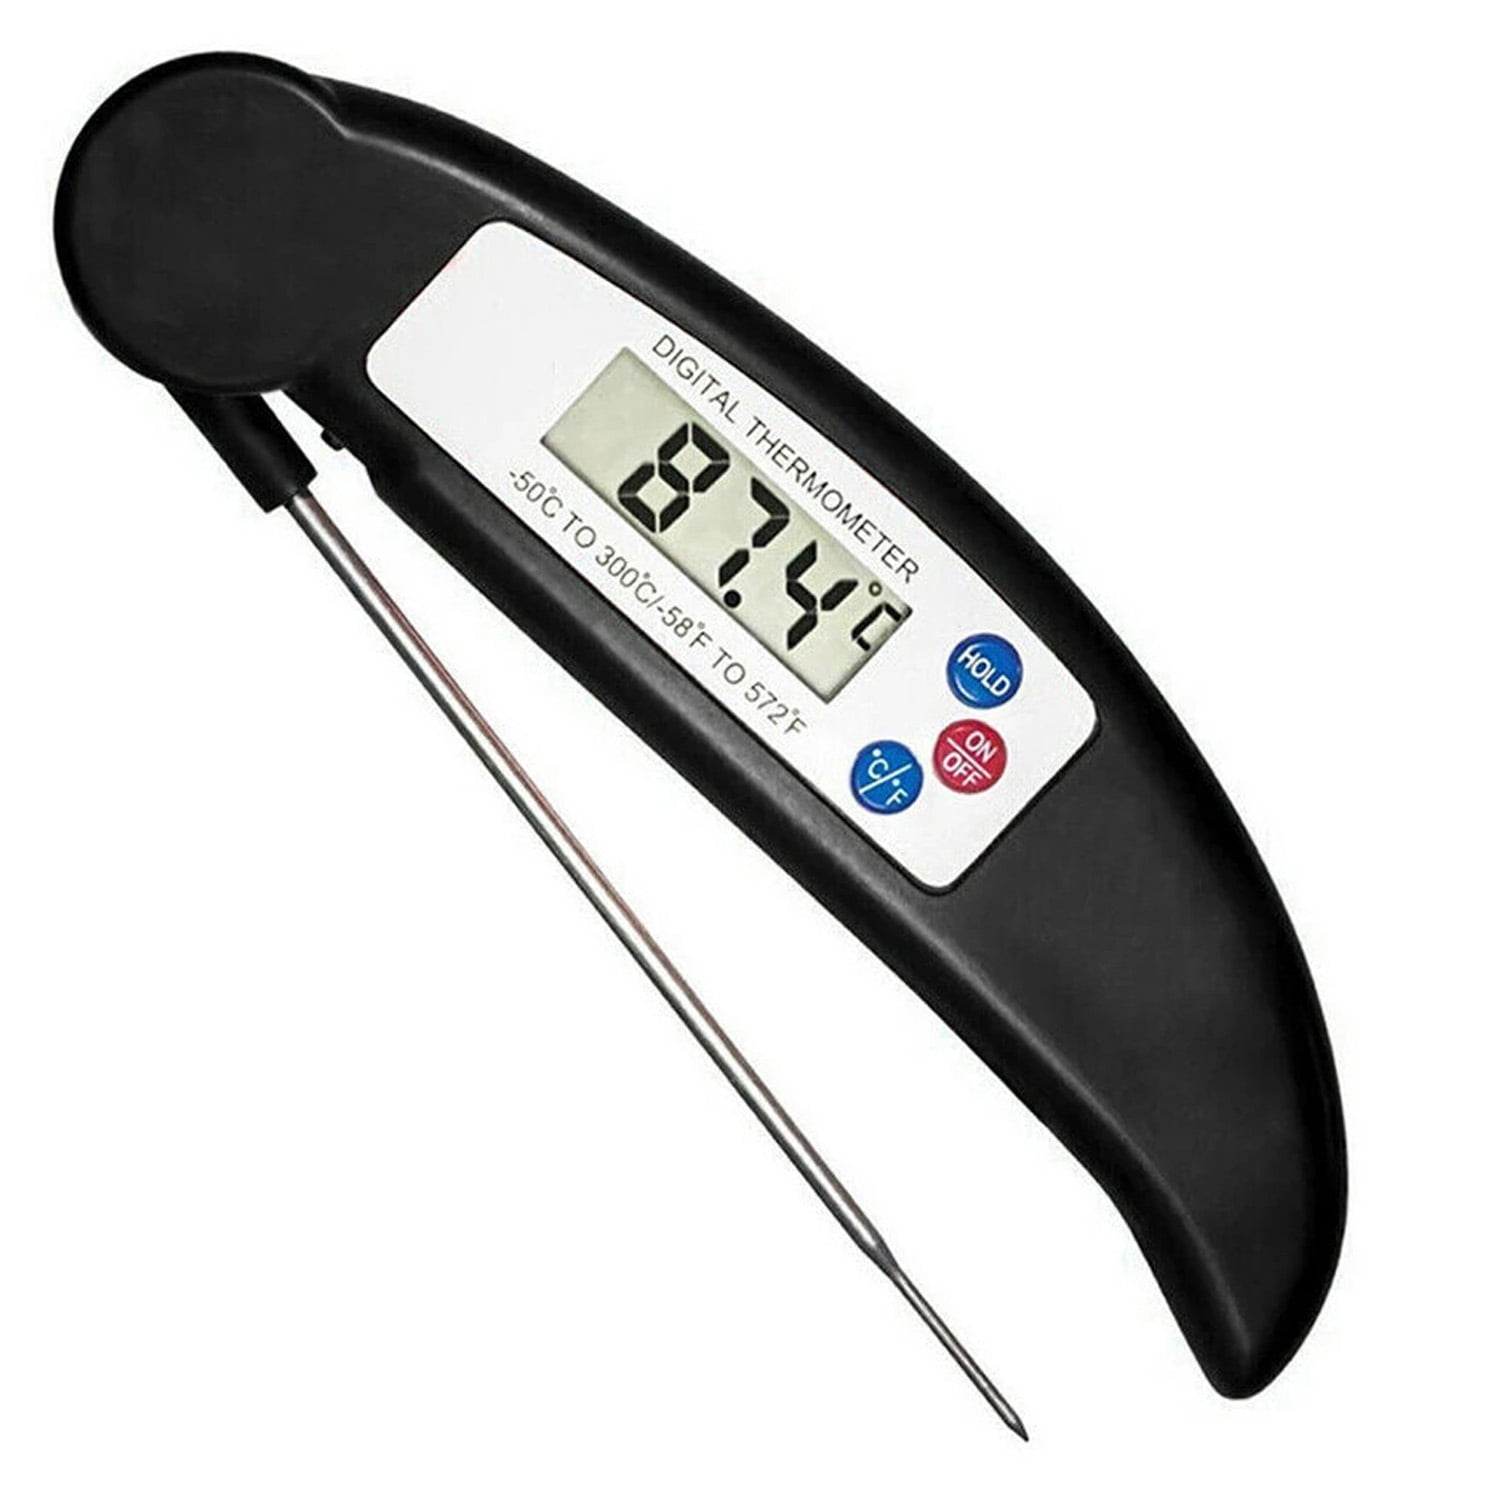 BONYOUN Instant Read Digital Food Thermometer